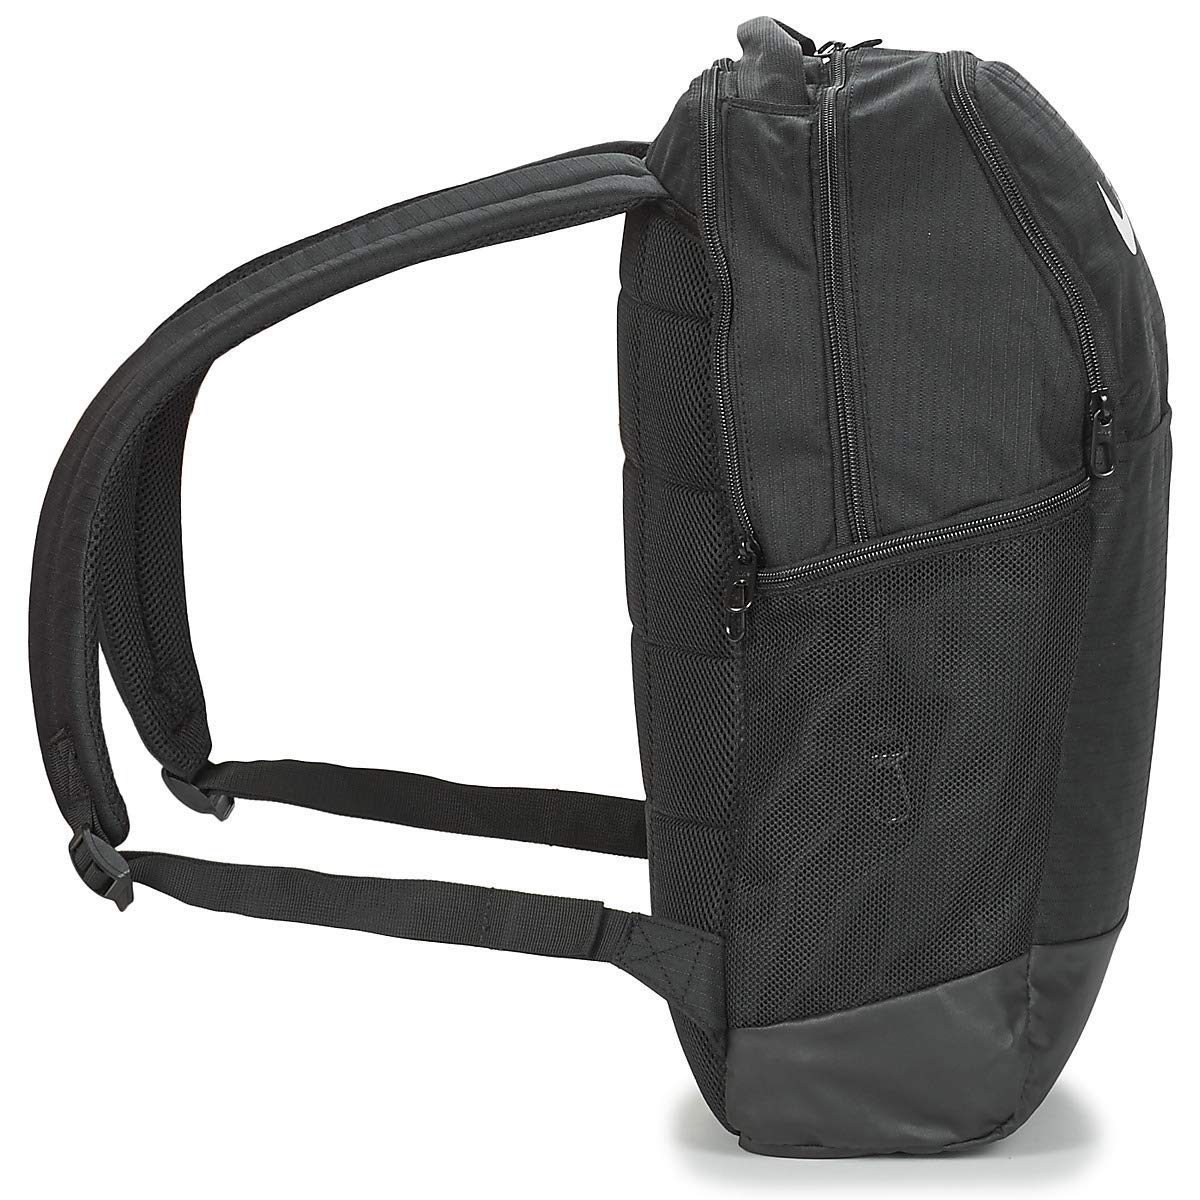 Nike Brasilia Medium Training Backpack for Women and Men with Secure Storage & Water Resistant Coating, Black/Black/White